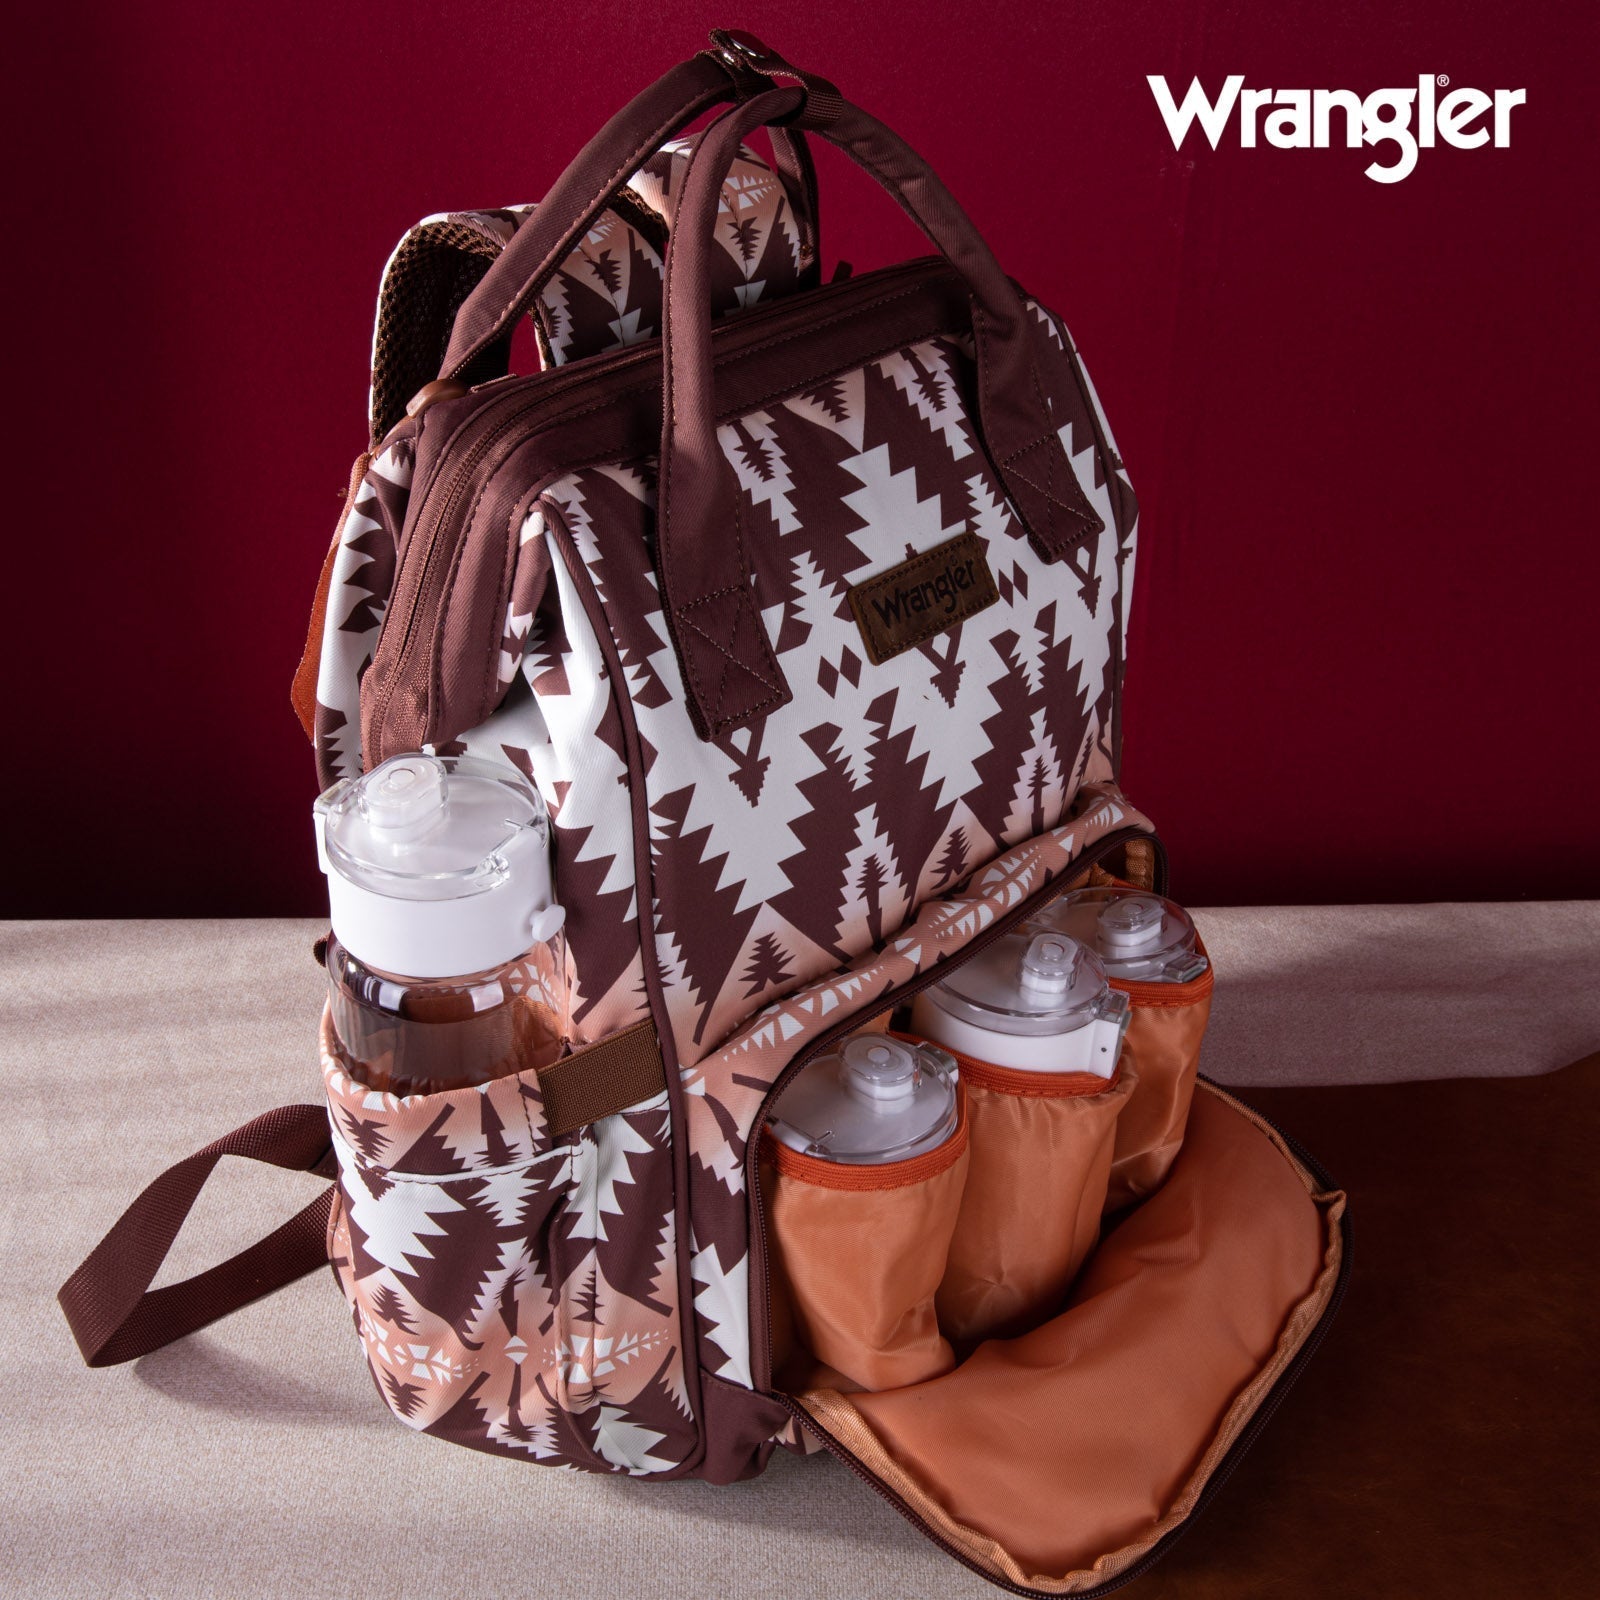 Wrangler Allover Aztec Dual Sided Backpack - Montana West World